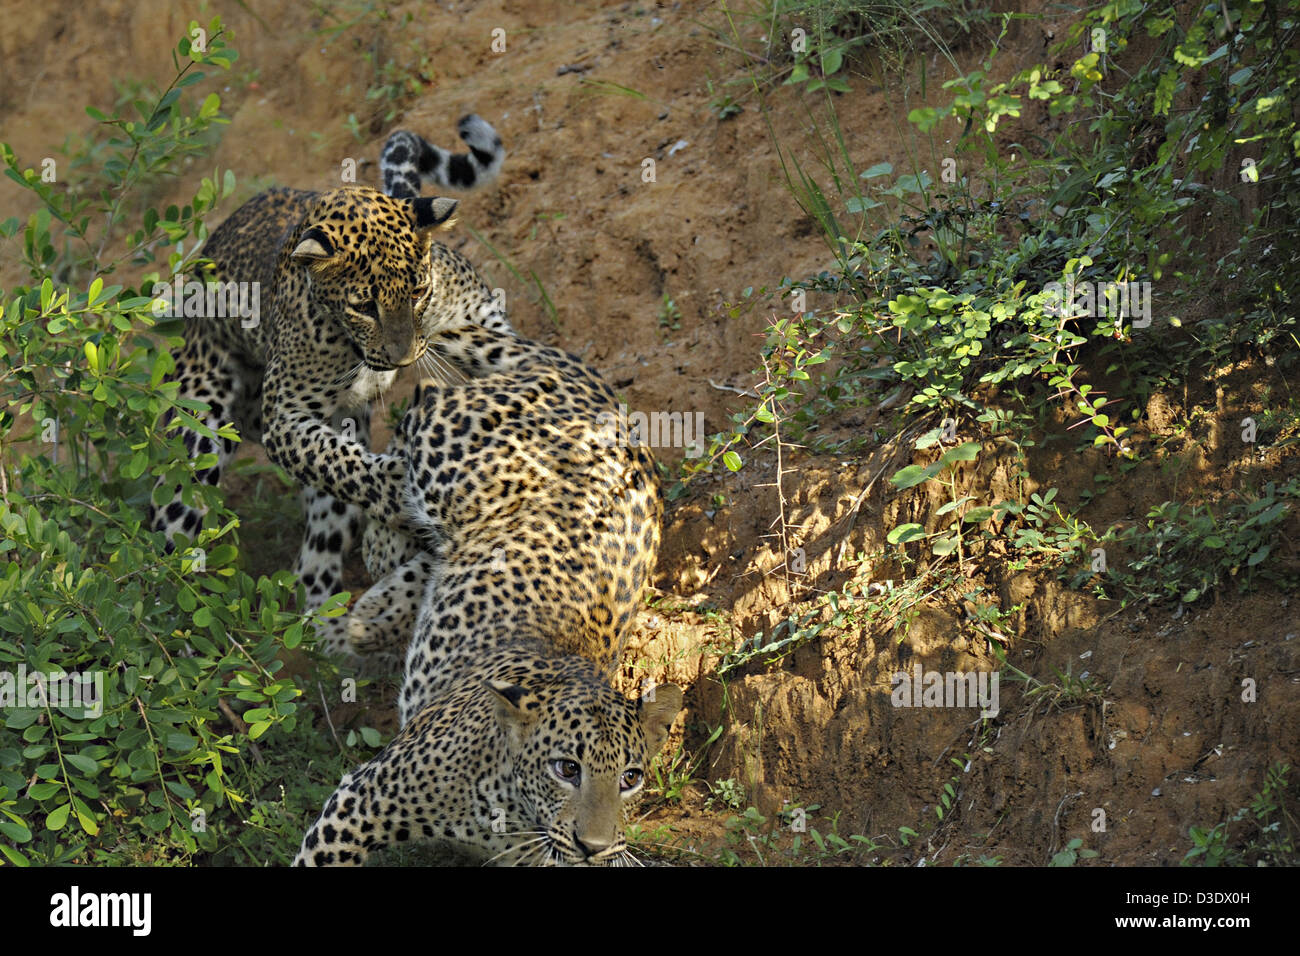 Two Leopards play fighting in Yala national park, Sri Lanka Stock Photo